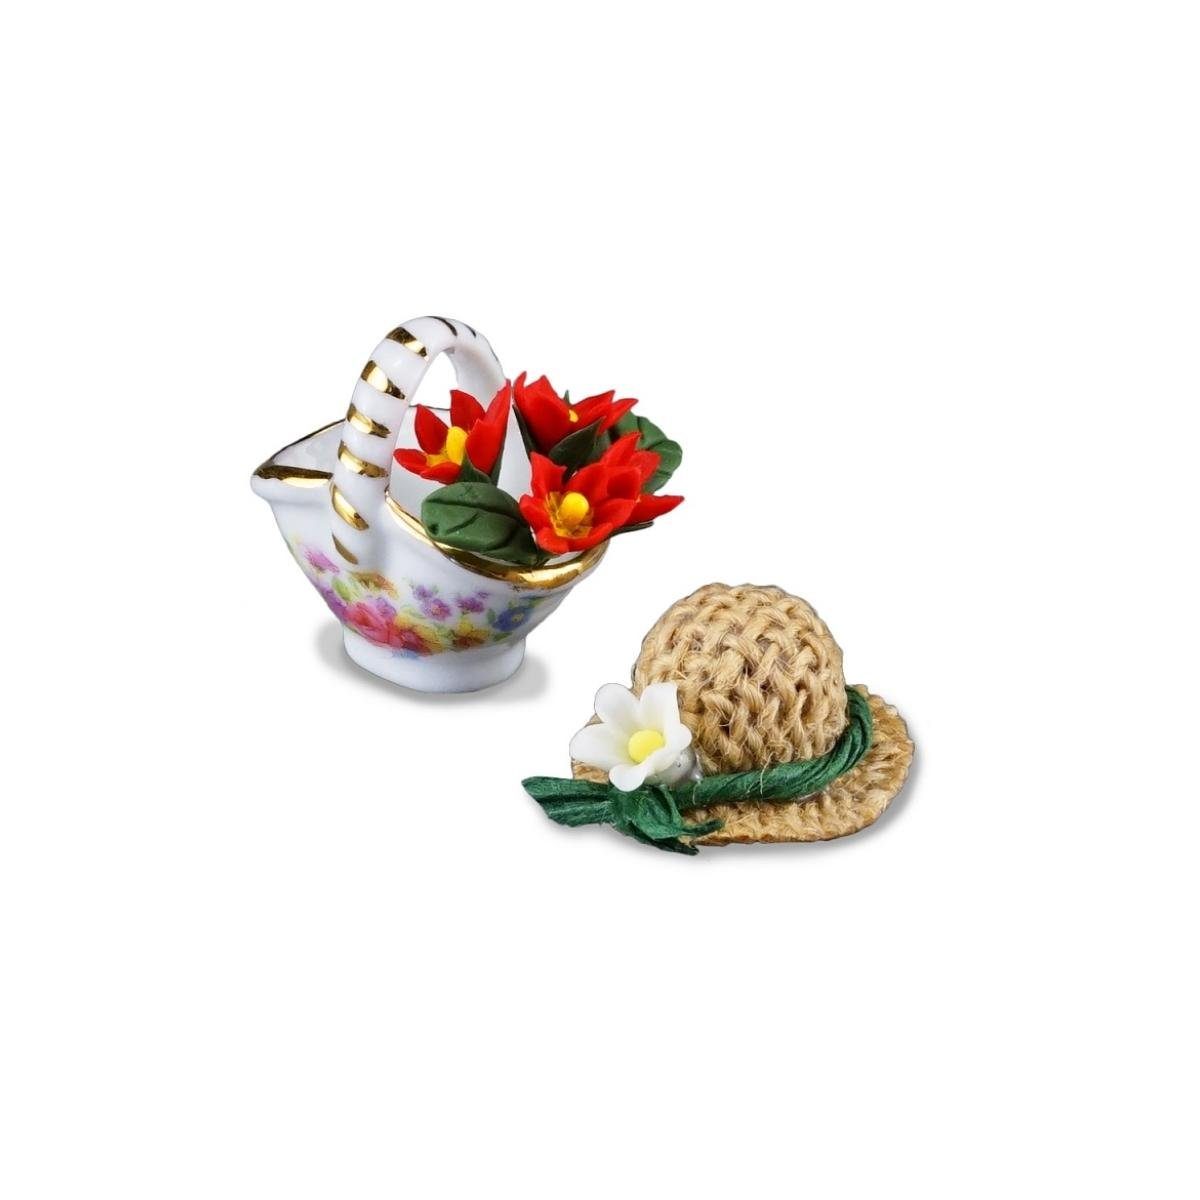 Reutter Porzellan Dekofigur 001.319/5 mit Miniatur Hut, - Blumenkörbchen